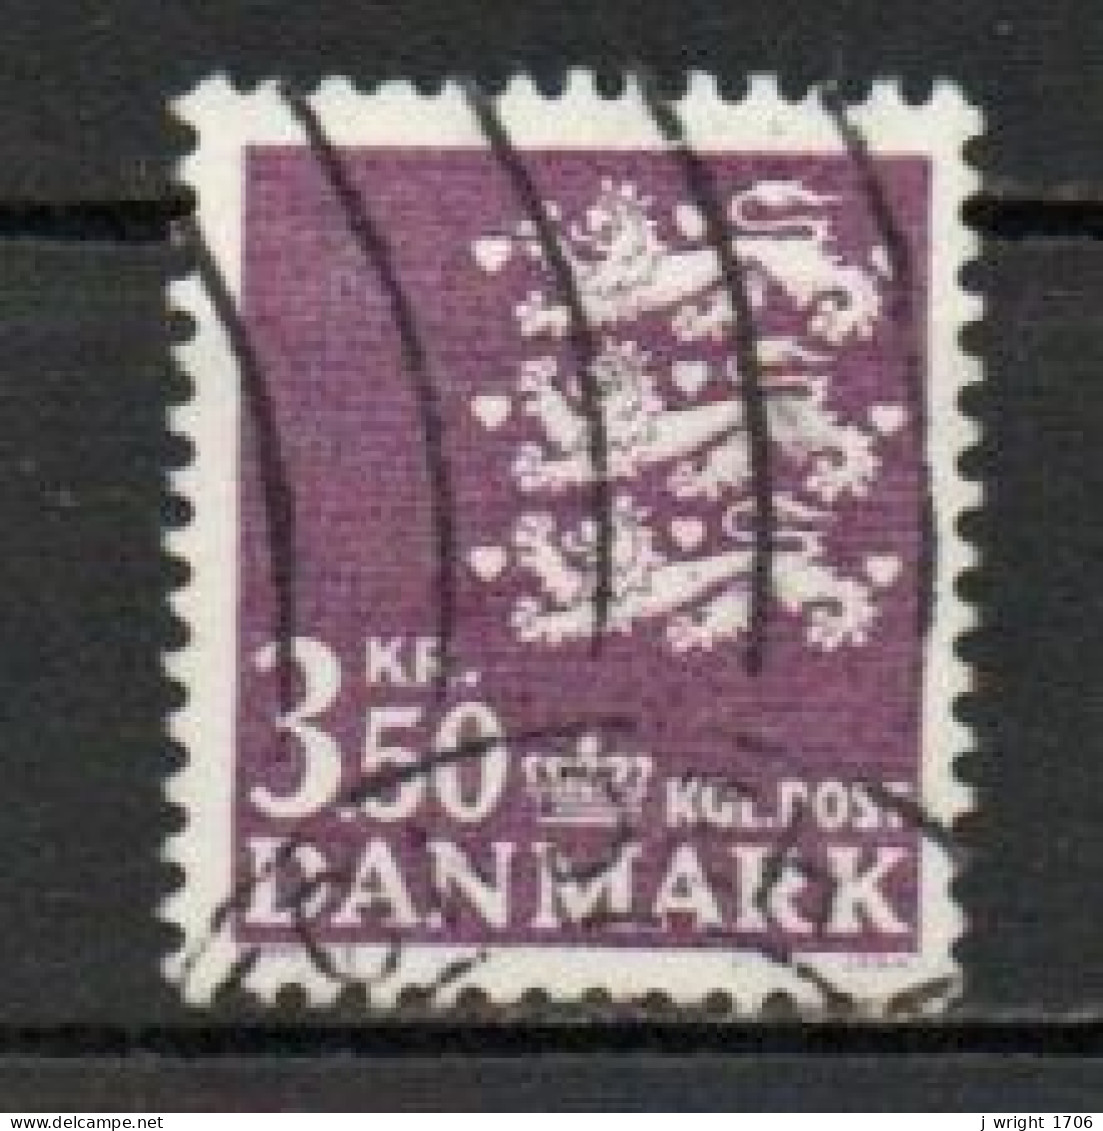 Denmark, 1972, Coat Of Arms, 3.50kr, USED - Gebruikt